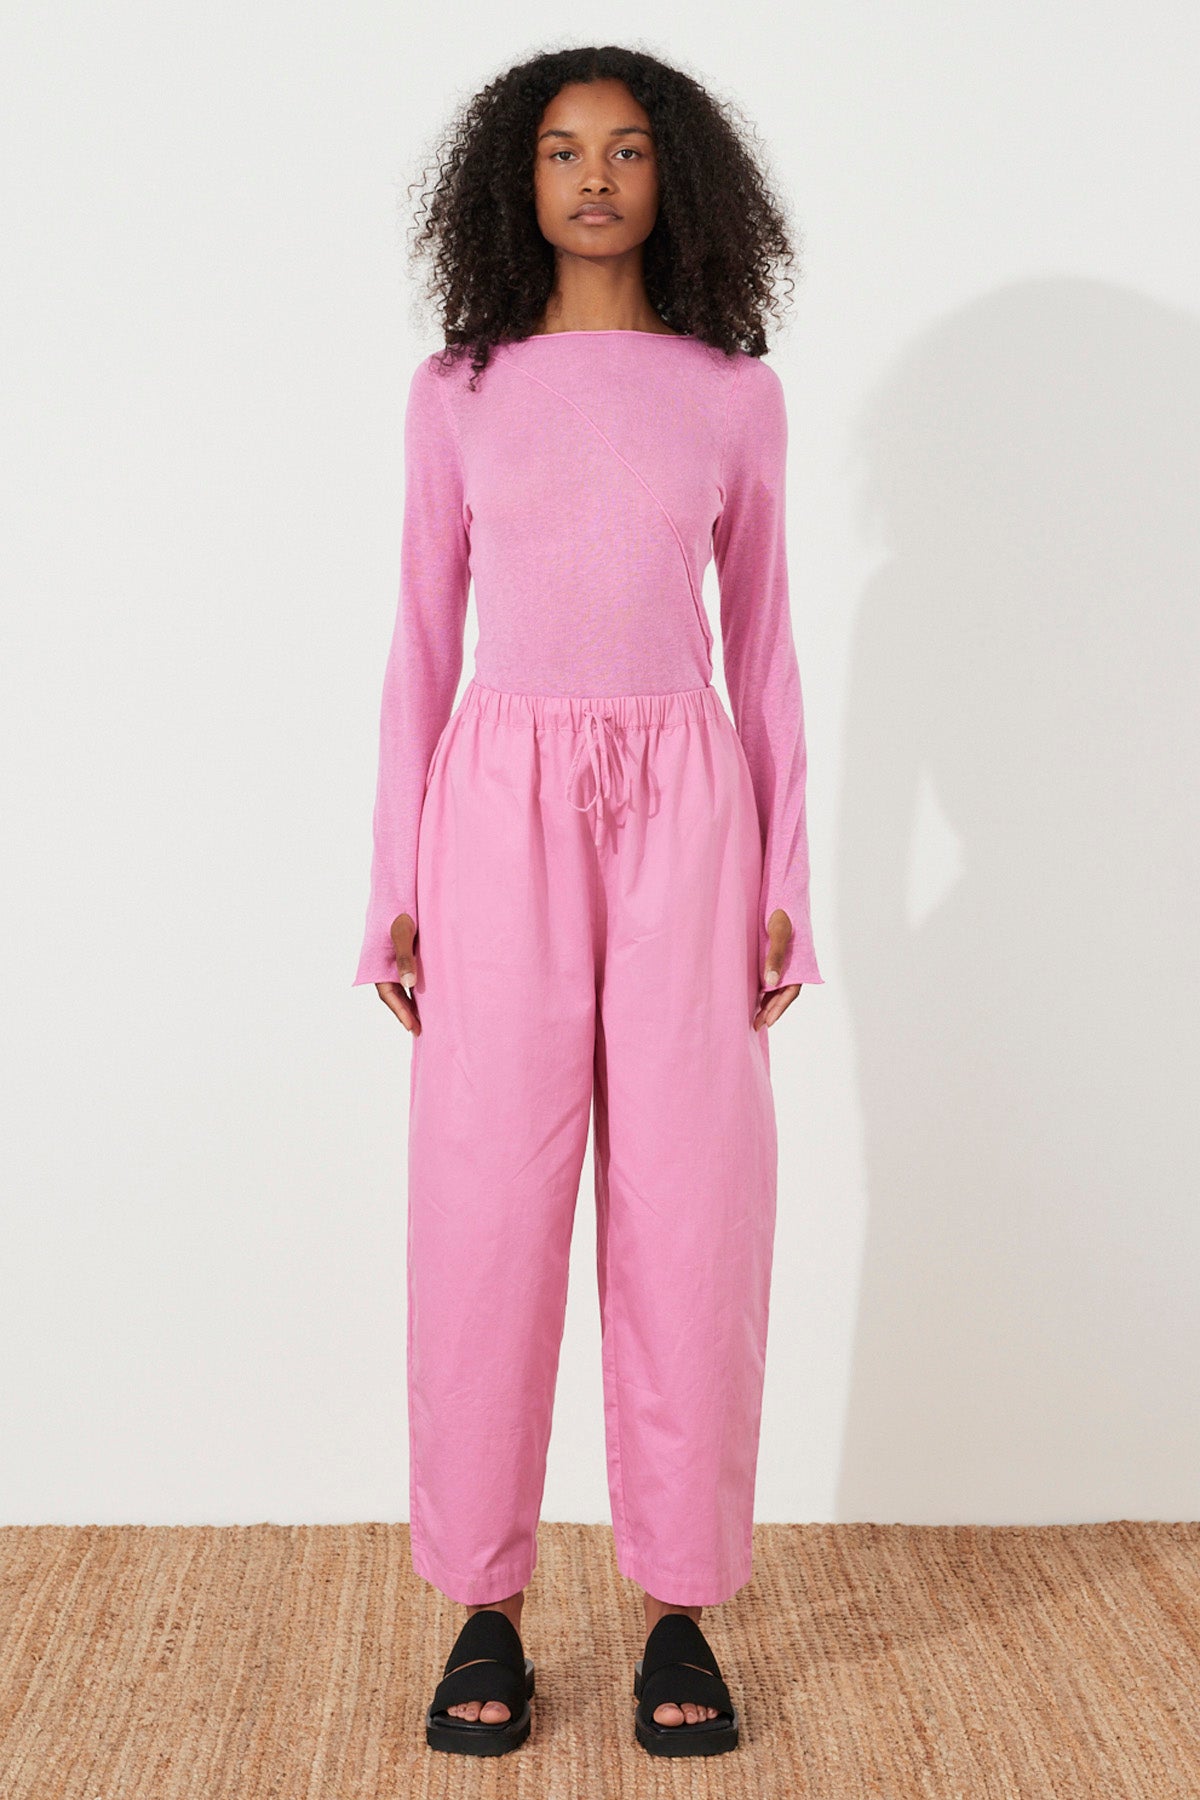 panelled knit top | sea pink | zulu & zephyr